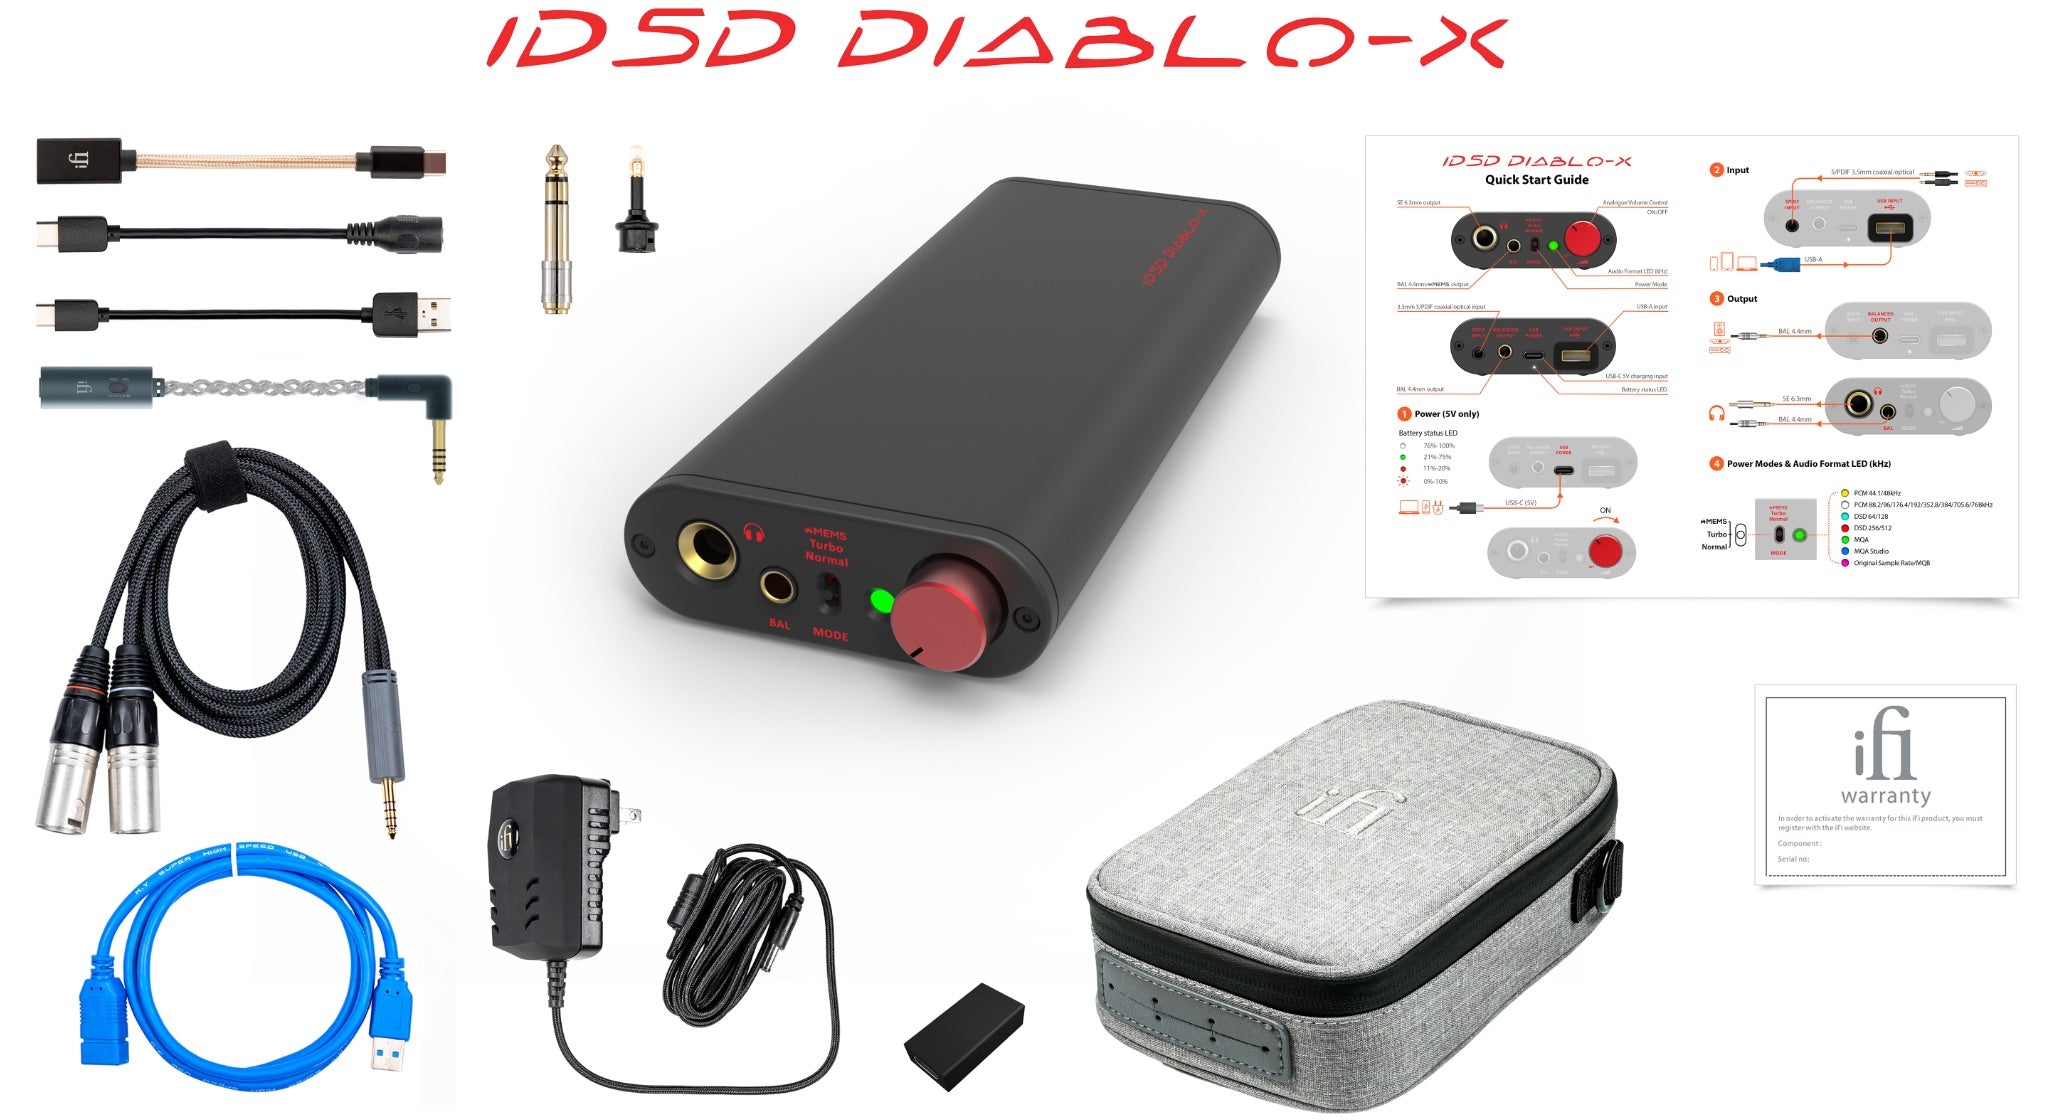 iFi iDSD Diablo-X what's in the box diagram